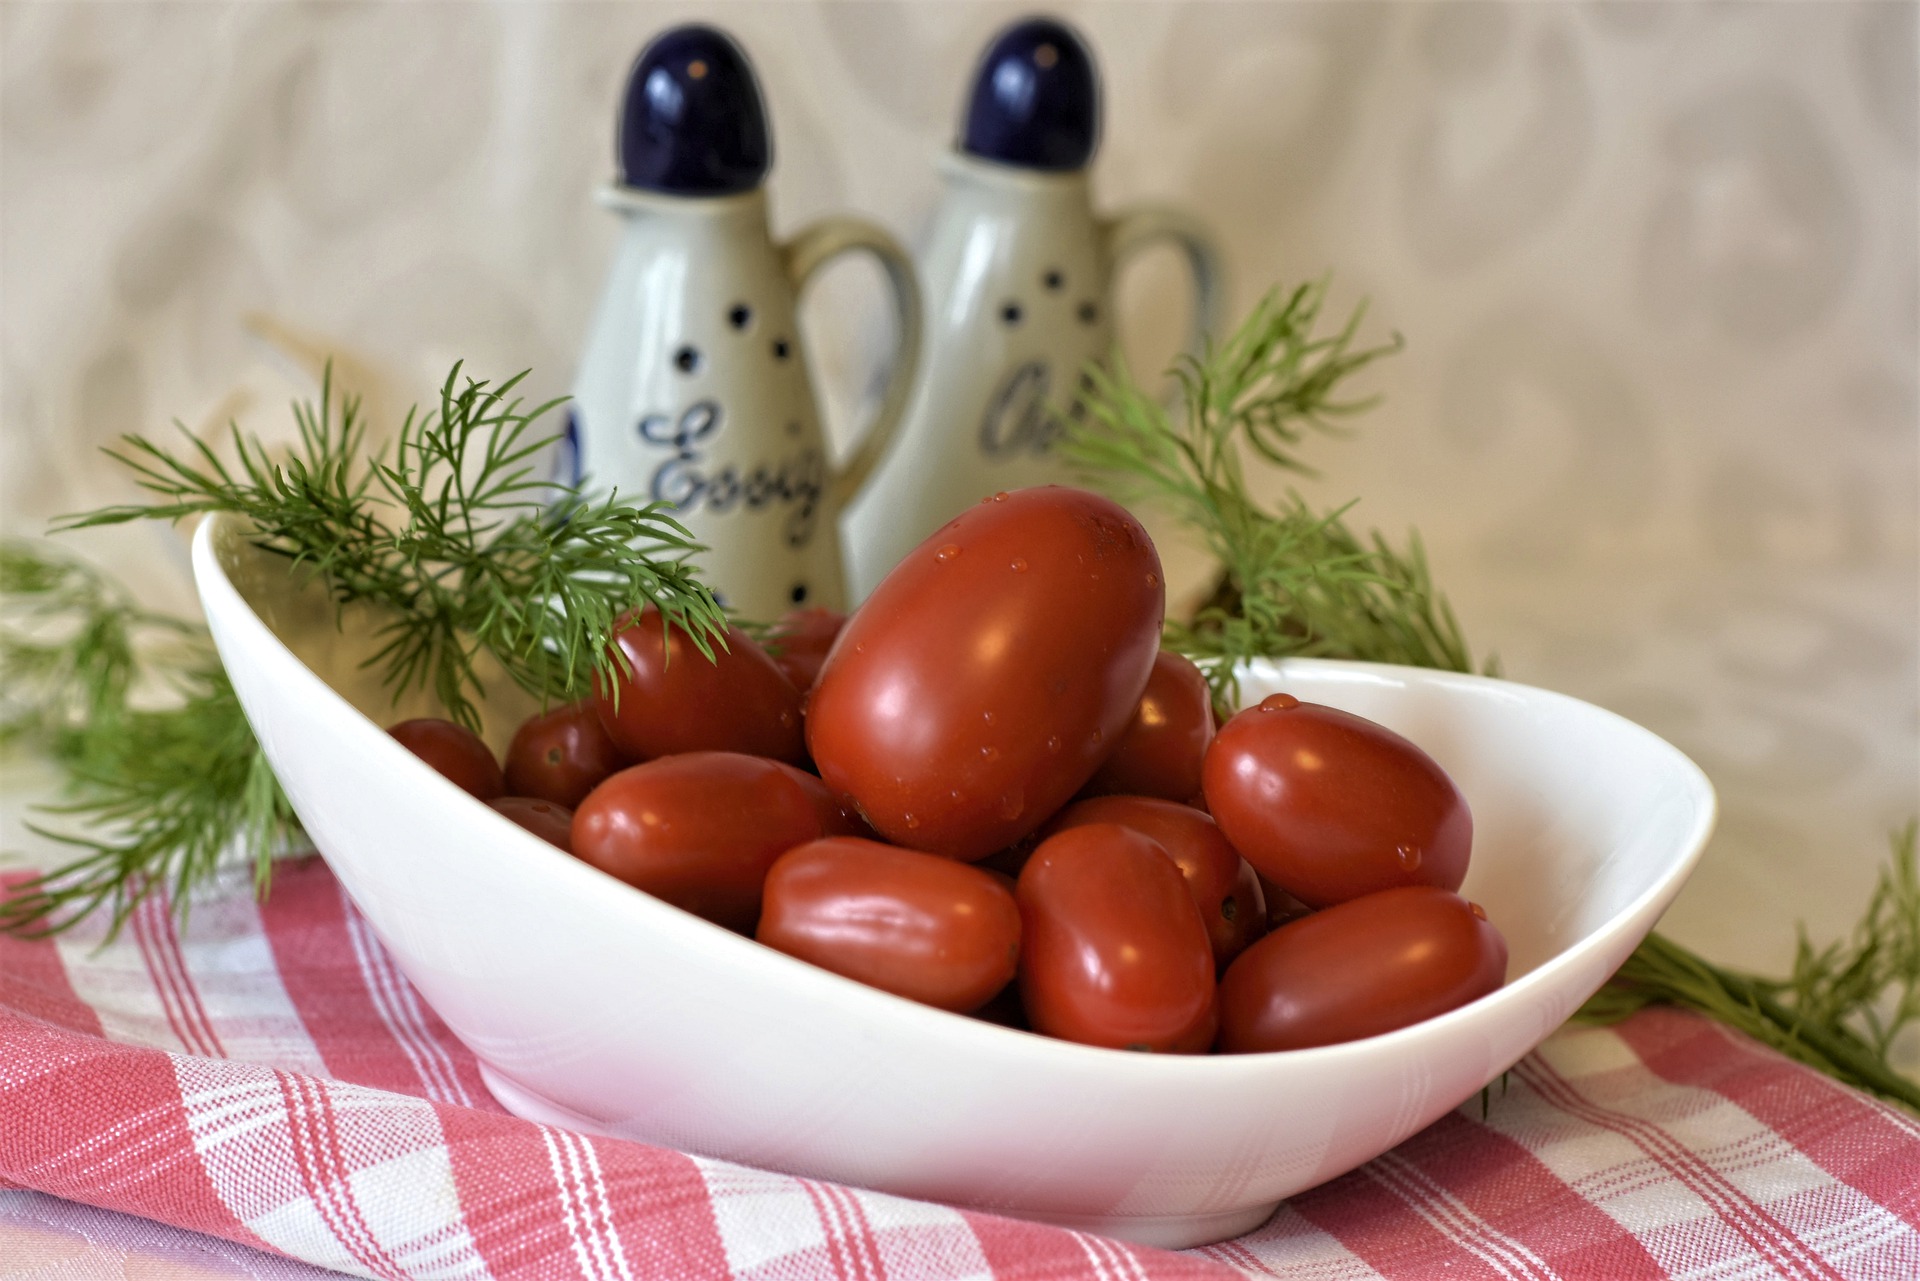 https://gastronomiaitaliana.com.br/wp-content/uploads/2021/07/tomatoes-g2ade64642_1920.jpg